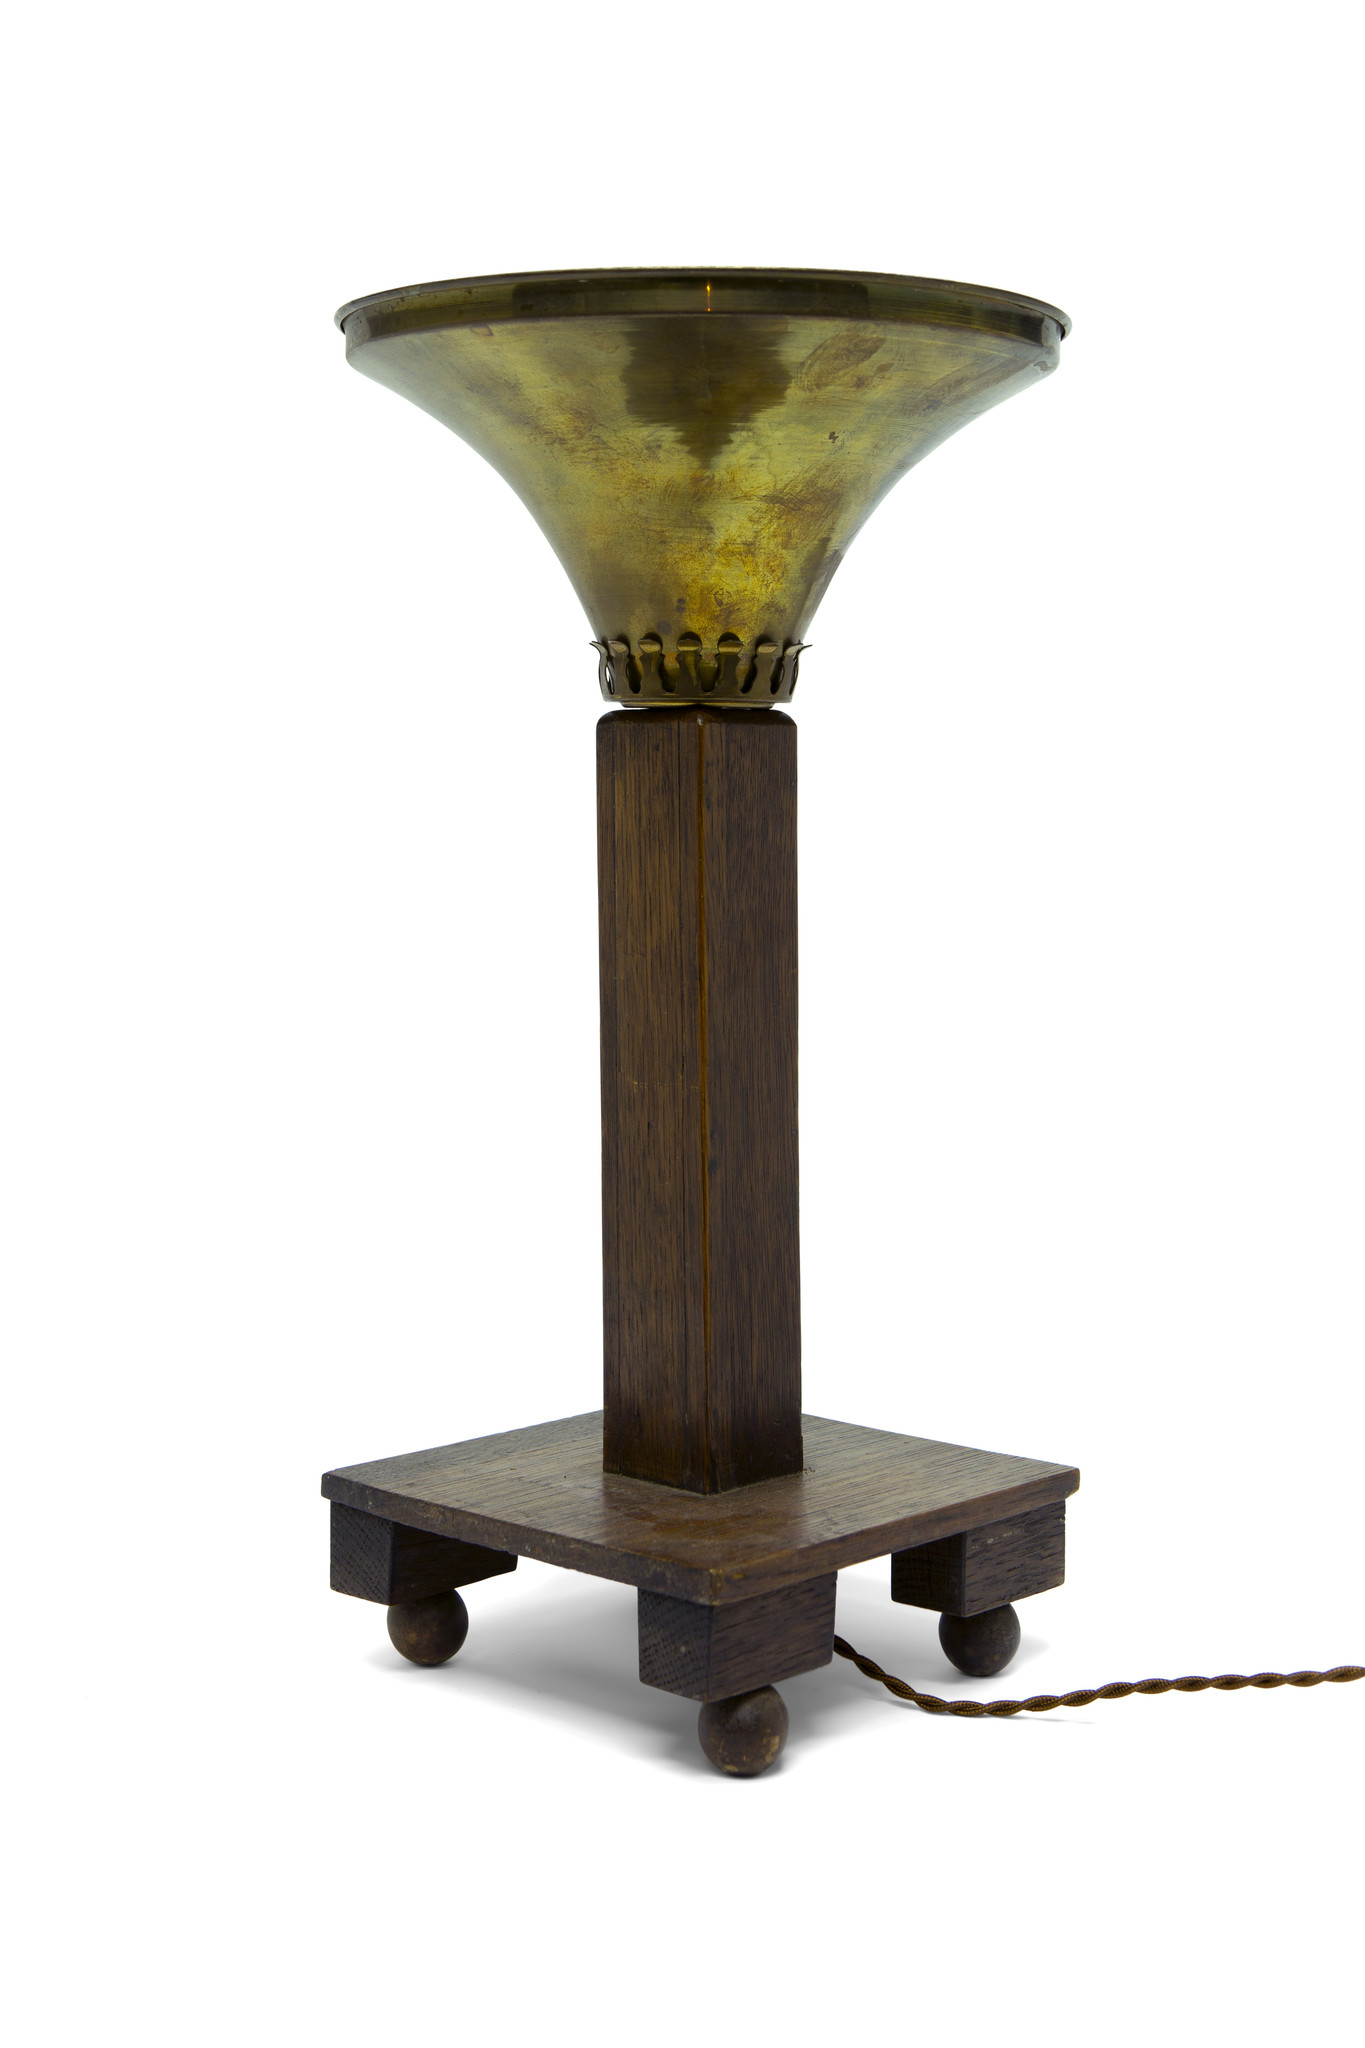 Ga door Uil Extreme armoede Oude tafellamp in Art Deco stijl met koperen lampenkap, ca. 1950 - Lamplord